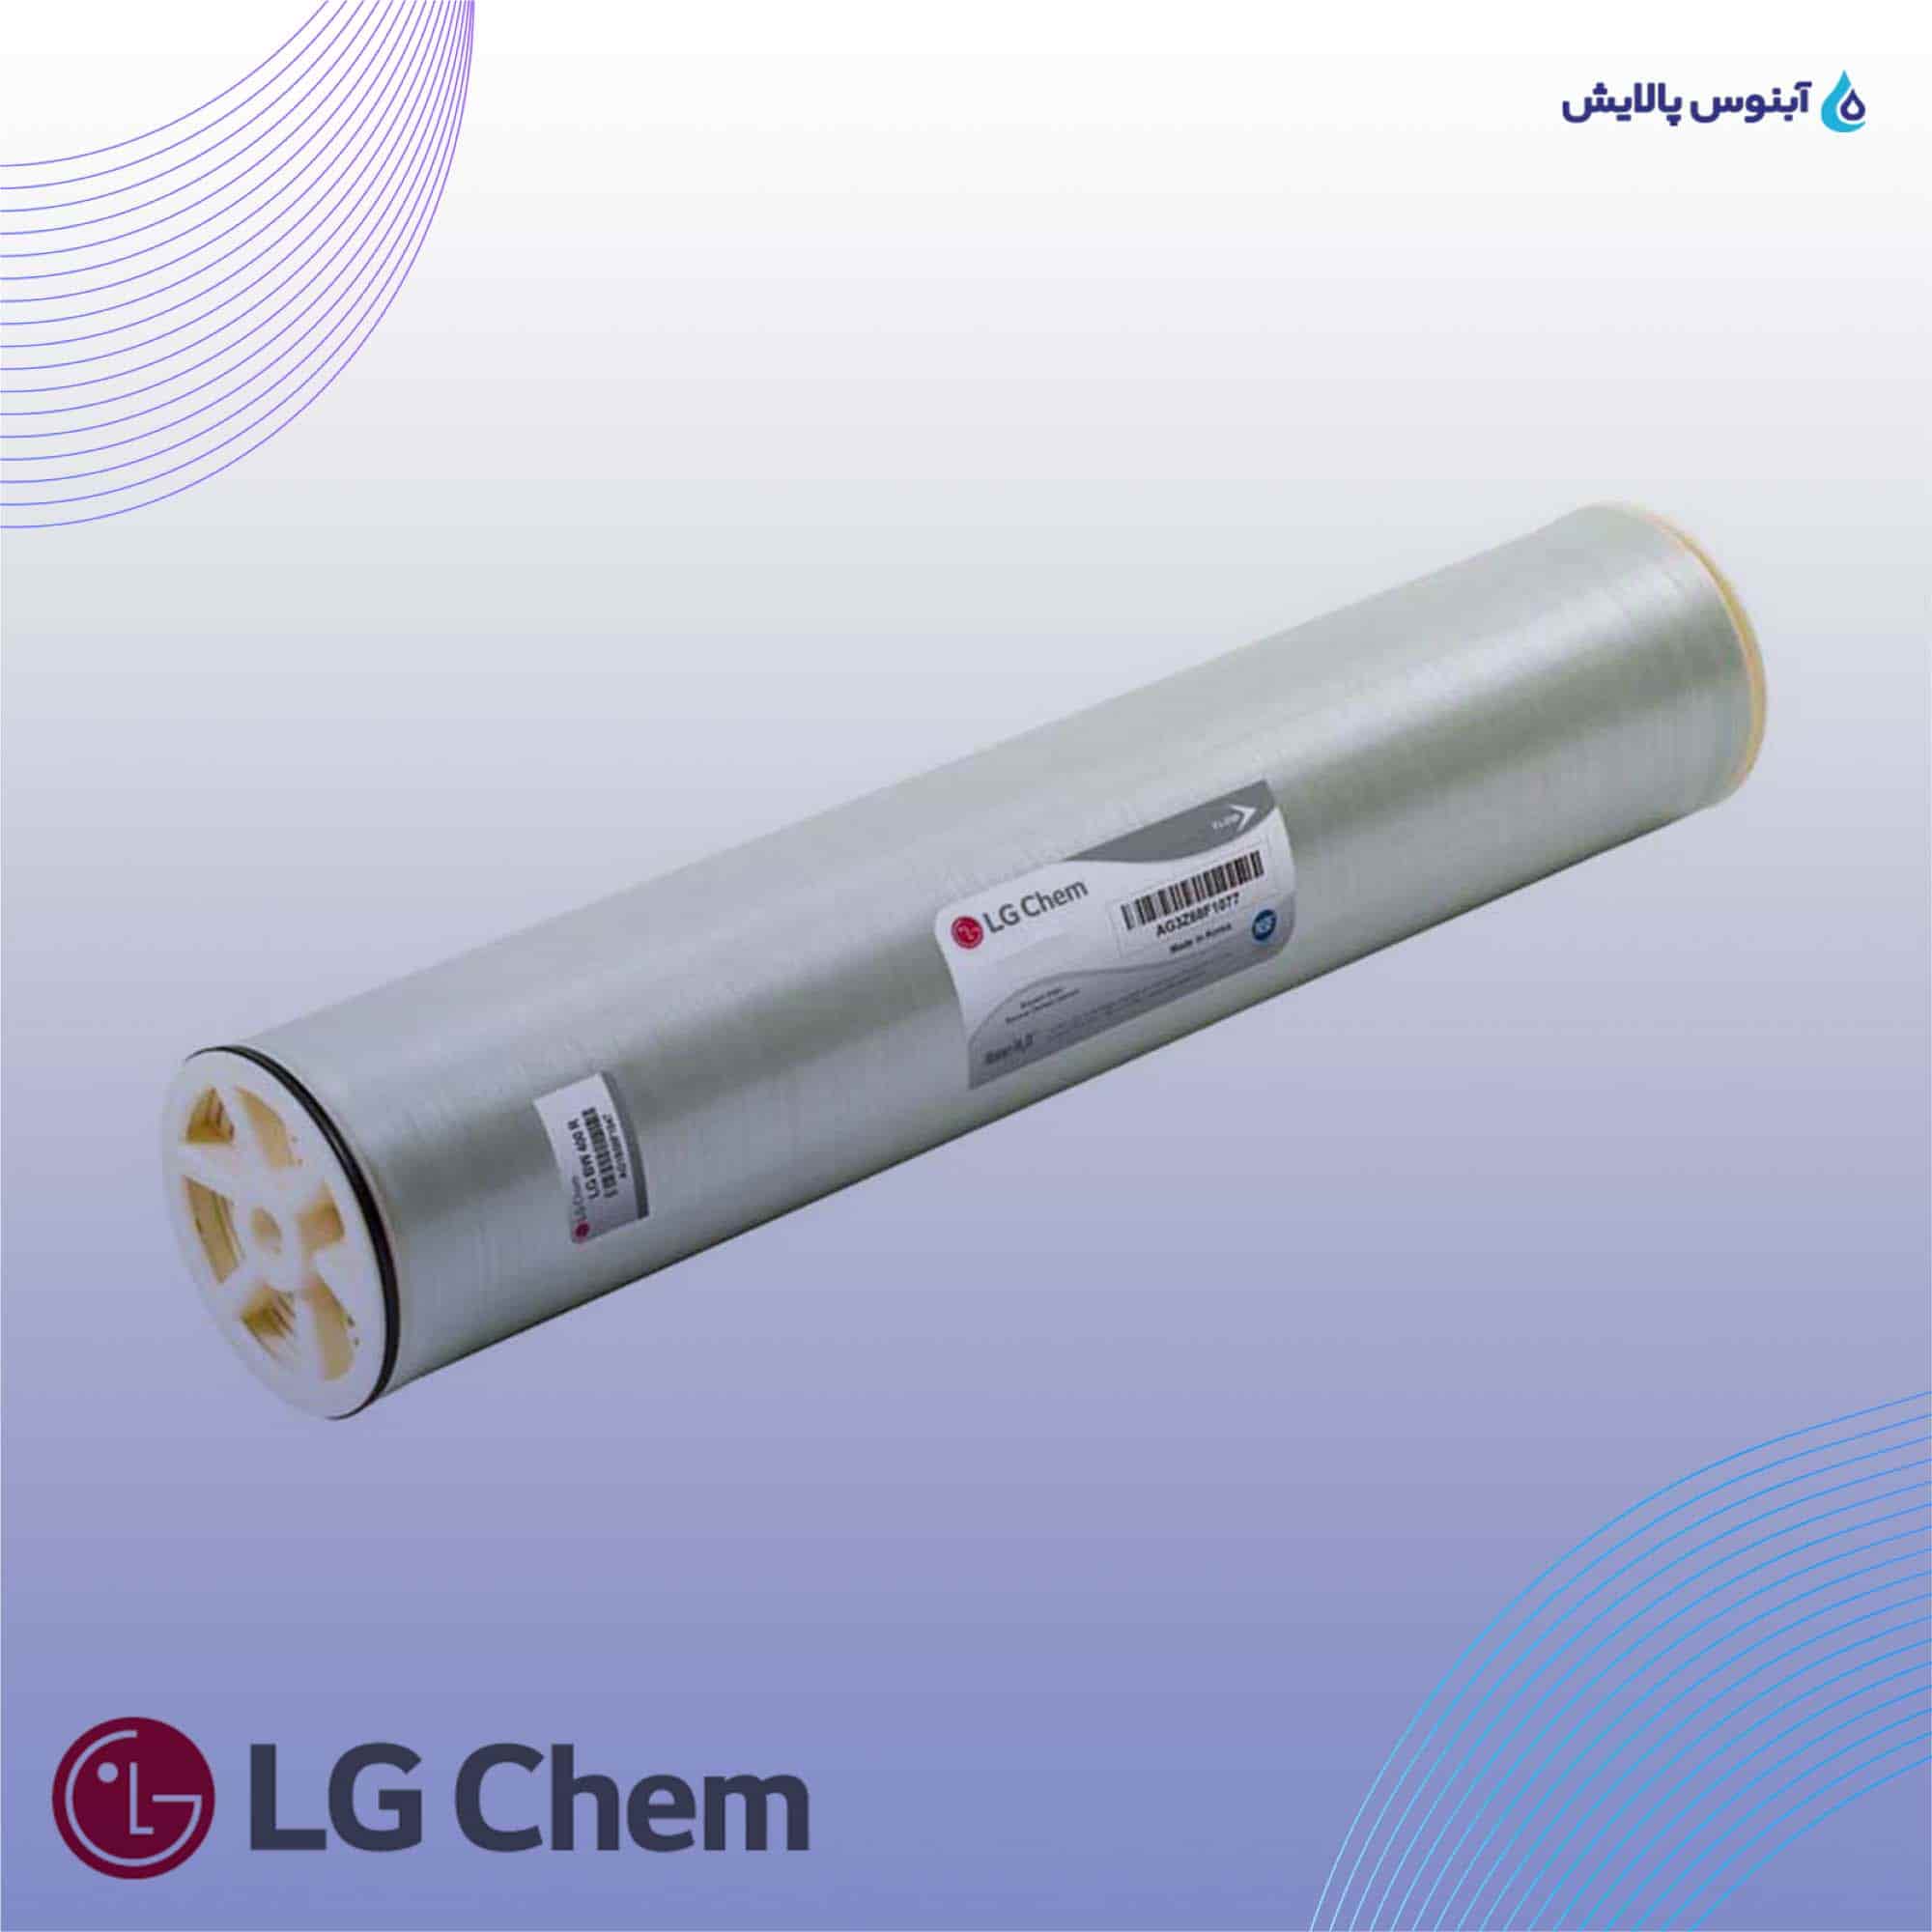 ممبران 8 اینچ ال جی کم (LG Chem) مدل LG BW 400 UES